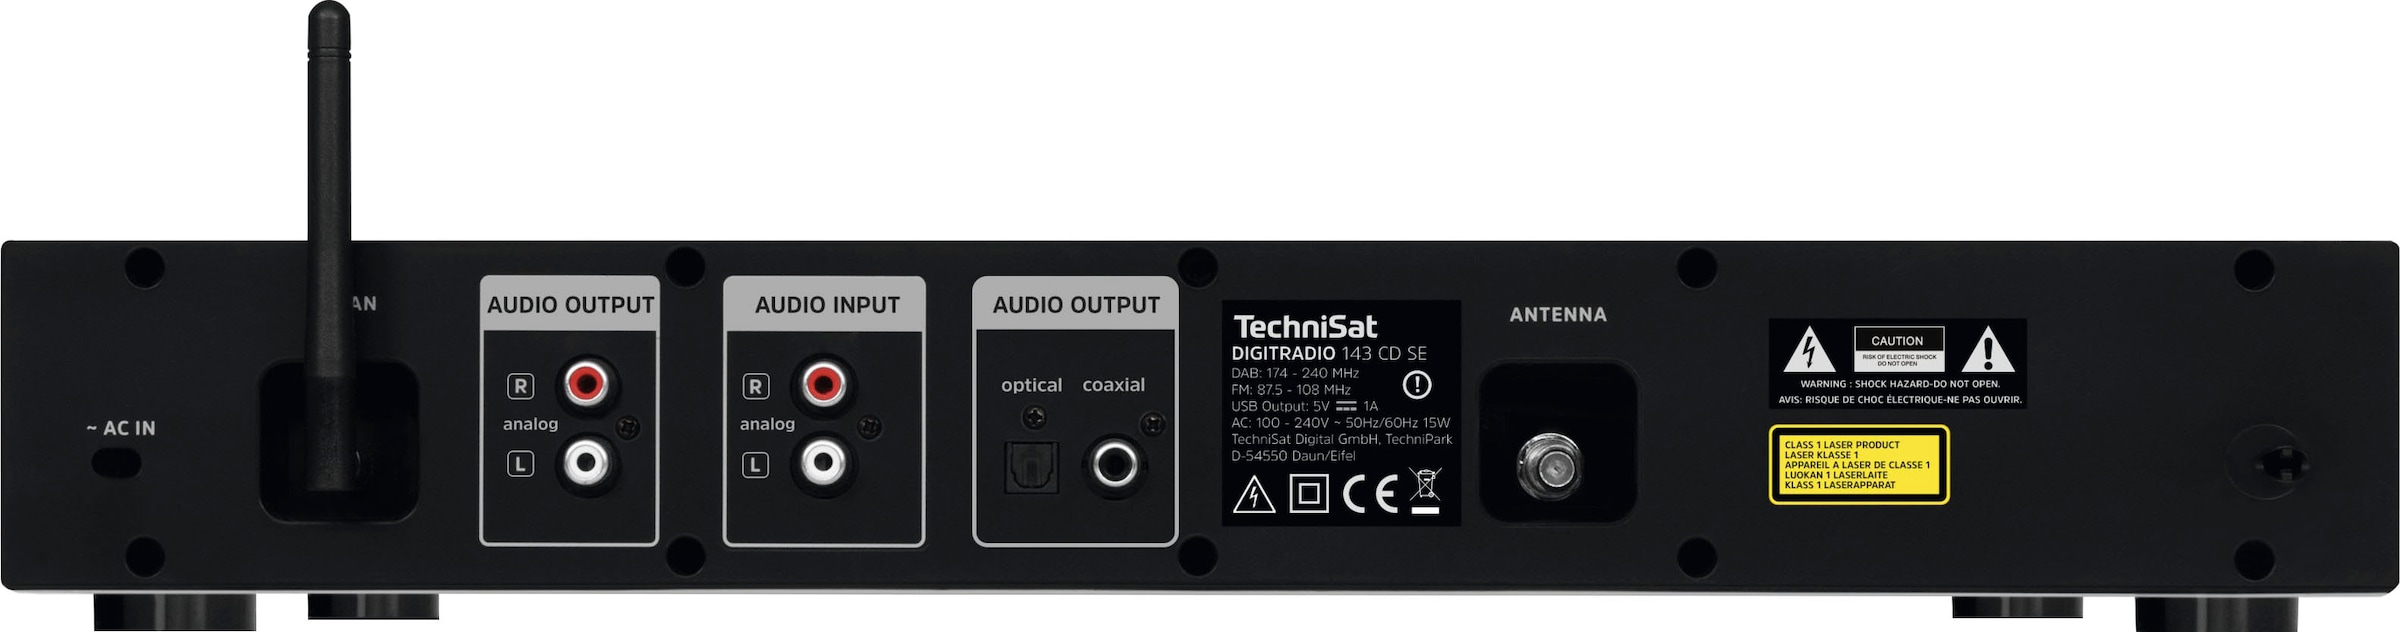 Internetradio-Digitalradio Digitalradio (DAB+)-UKW jetzt TechniSat OTTO »DIGITRADIO bestellen (Bluetooth-WLAN (V3)«, 143 CD mit (DAB+) bei RDS)